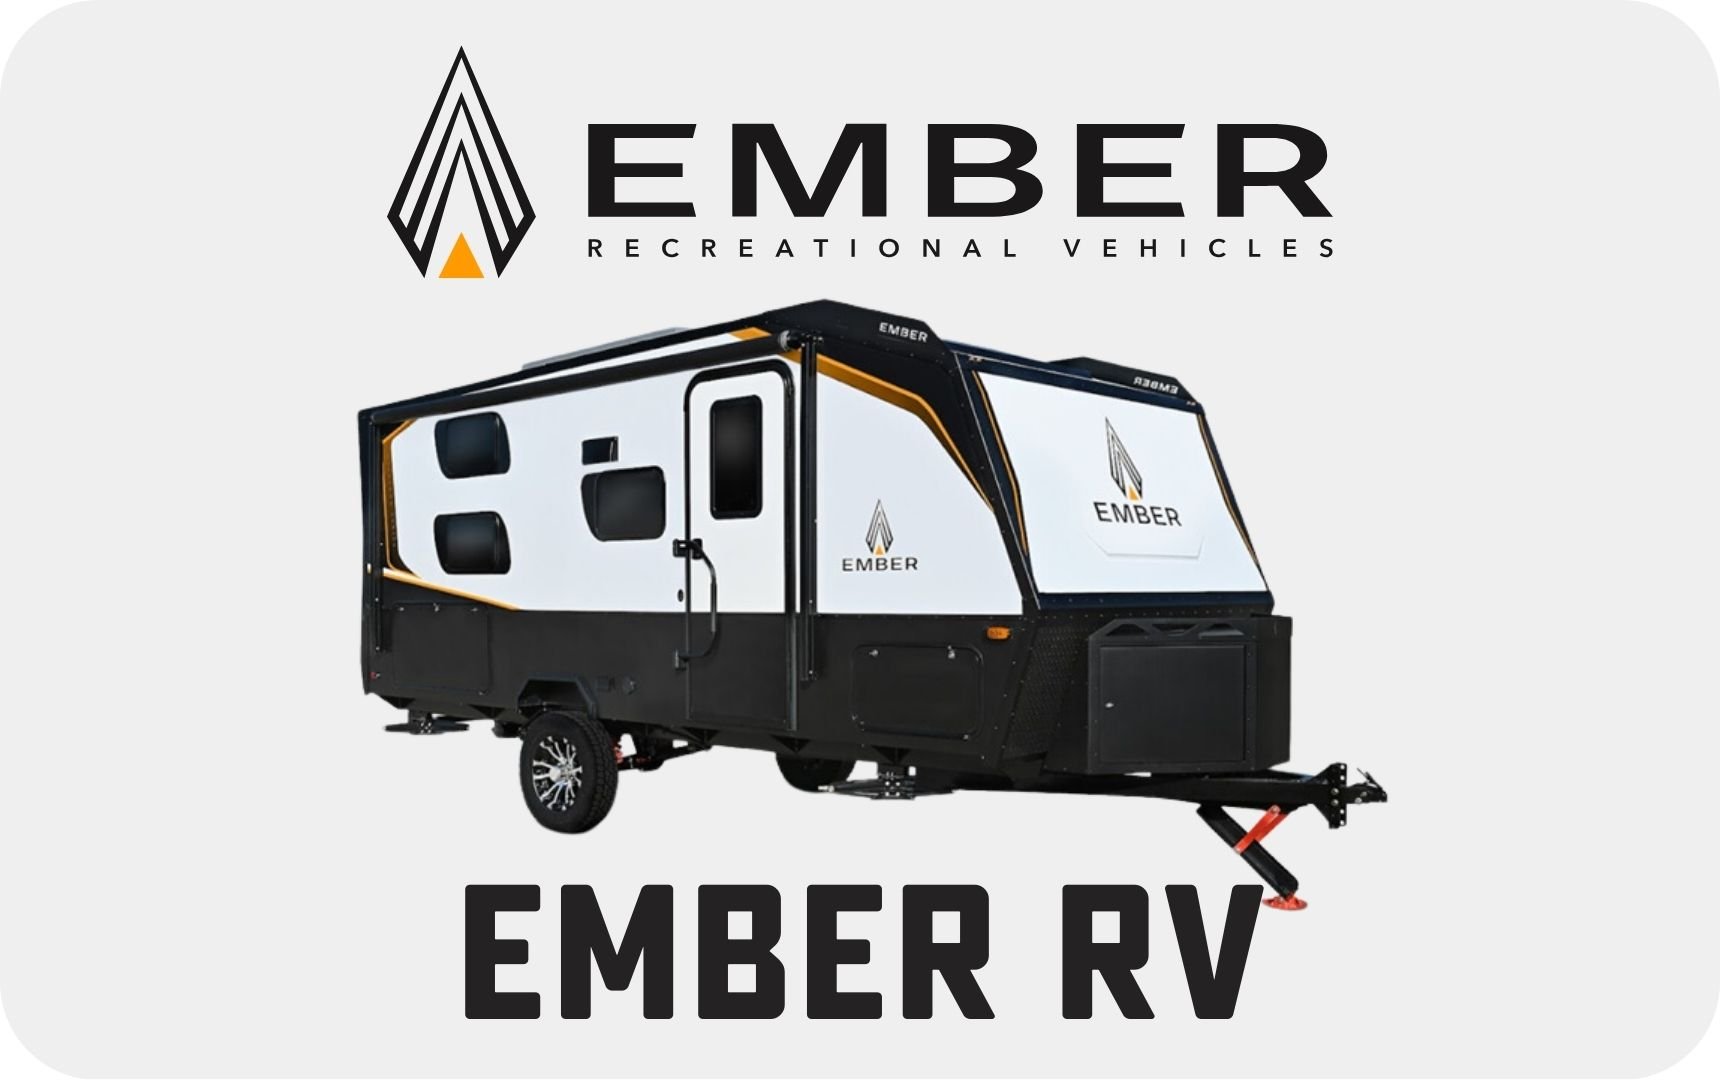 Ember RV Travel Trailers